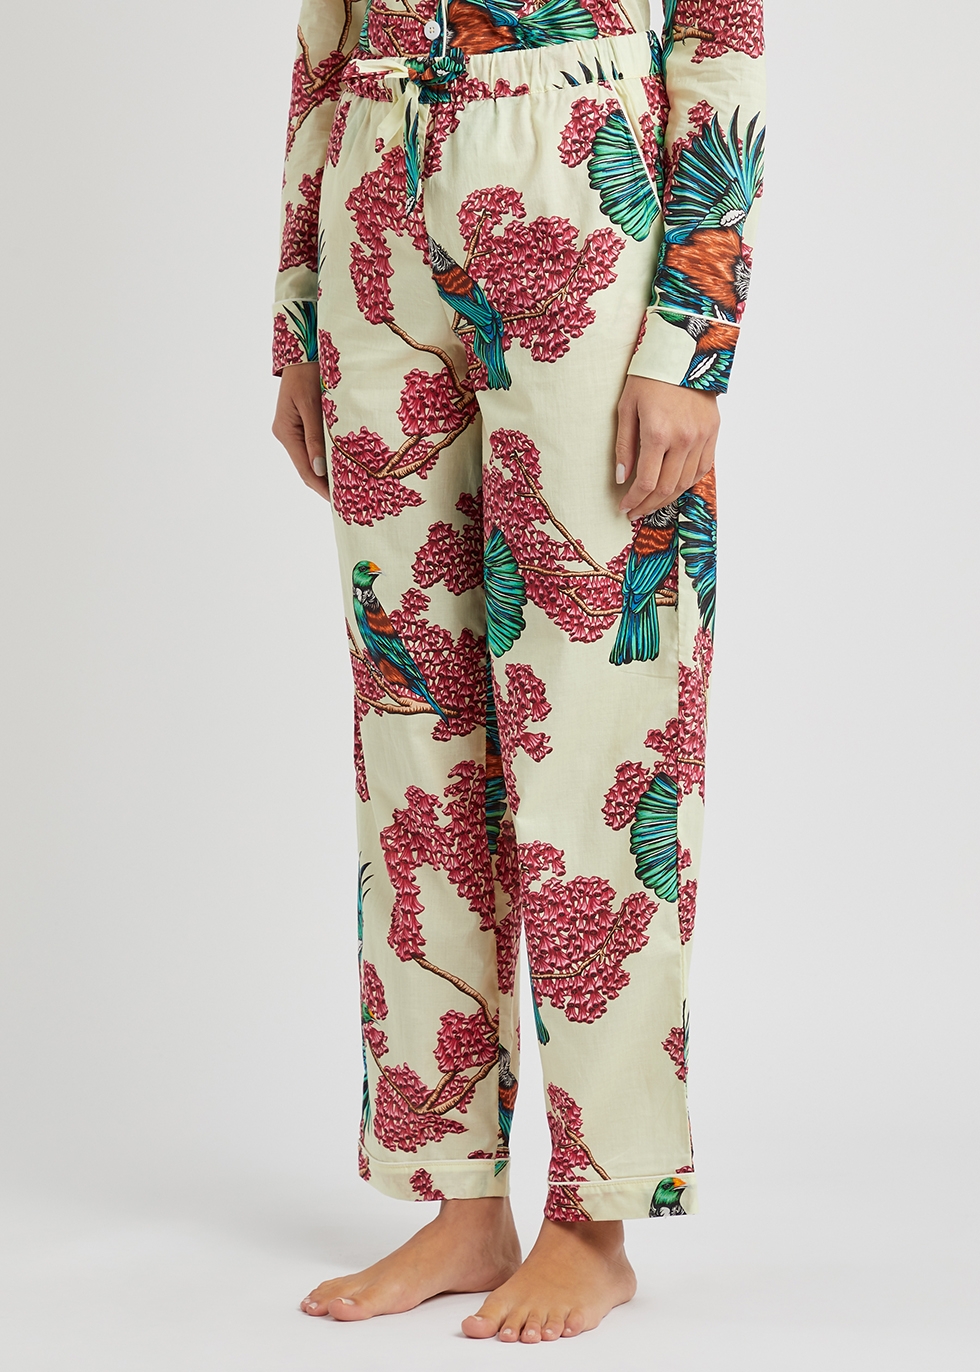 Desmond & Dempsey Passerine printed cotton pyjama set - Harvey Nichols